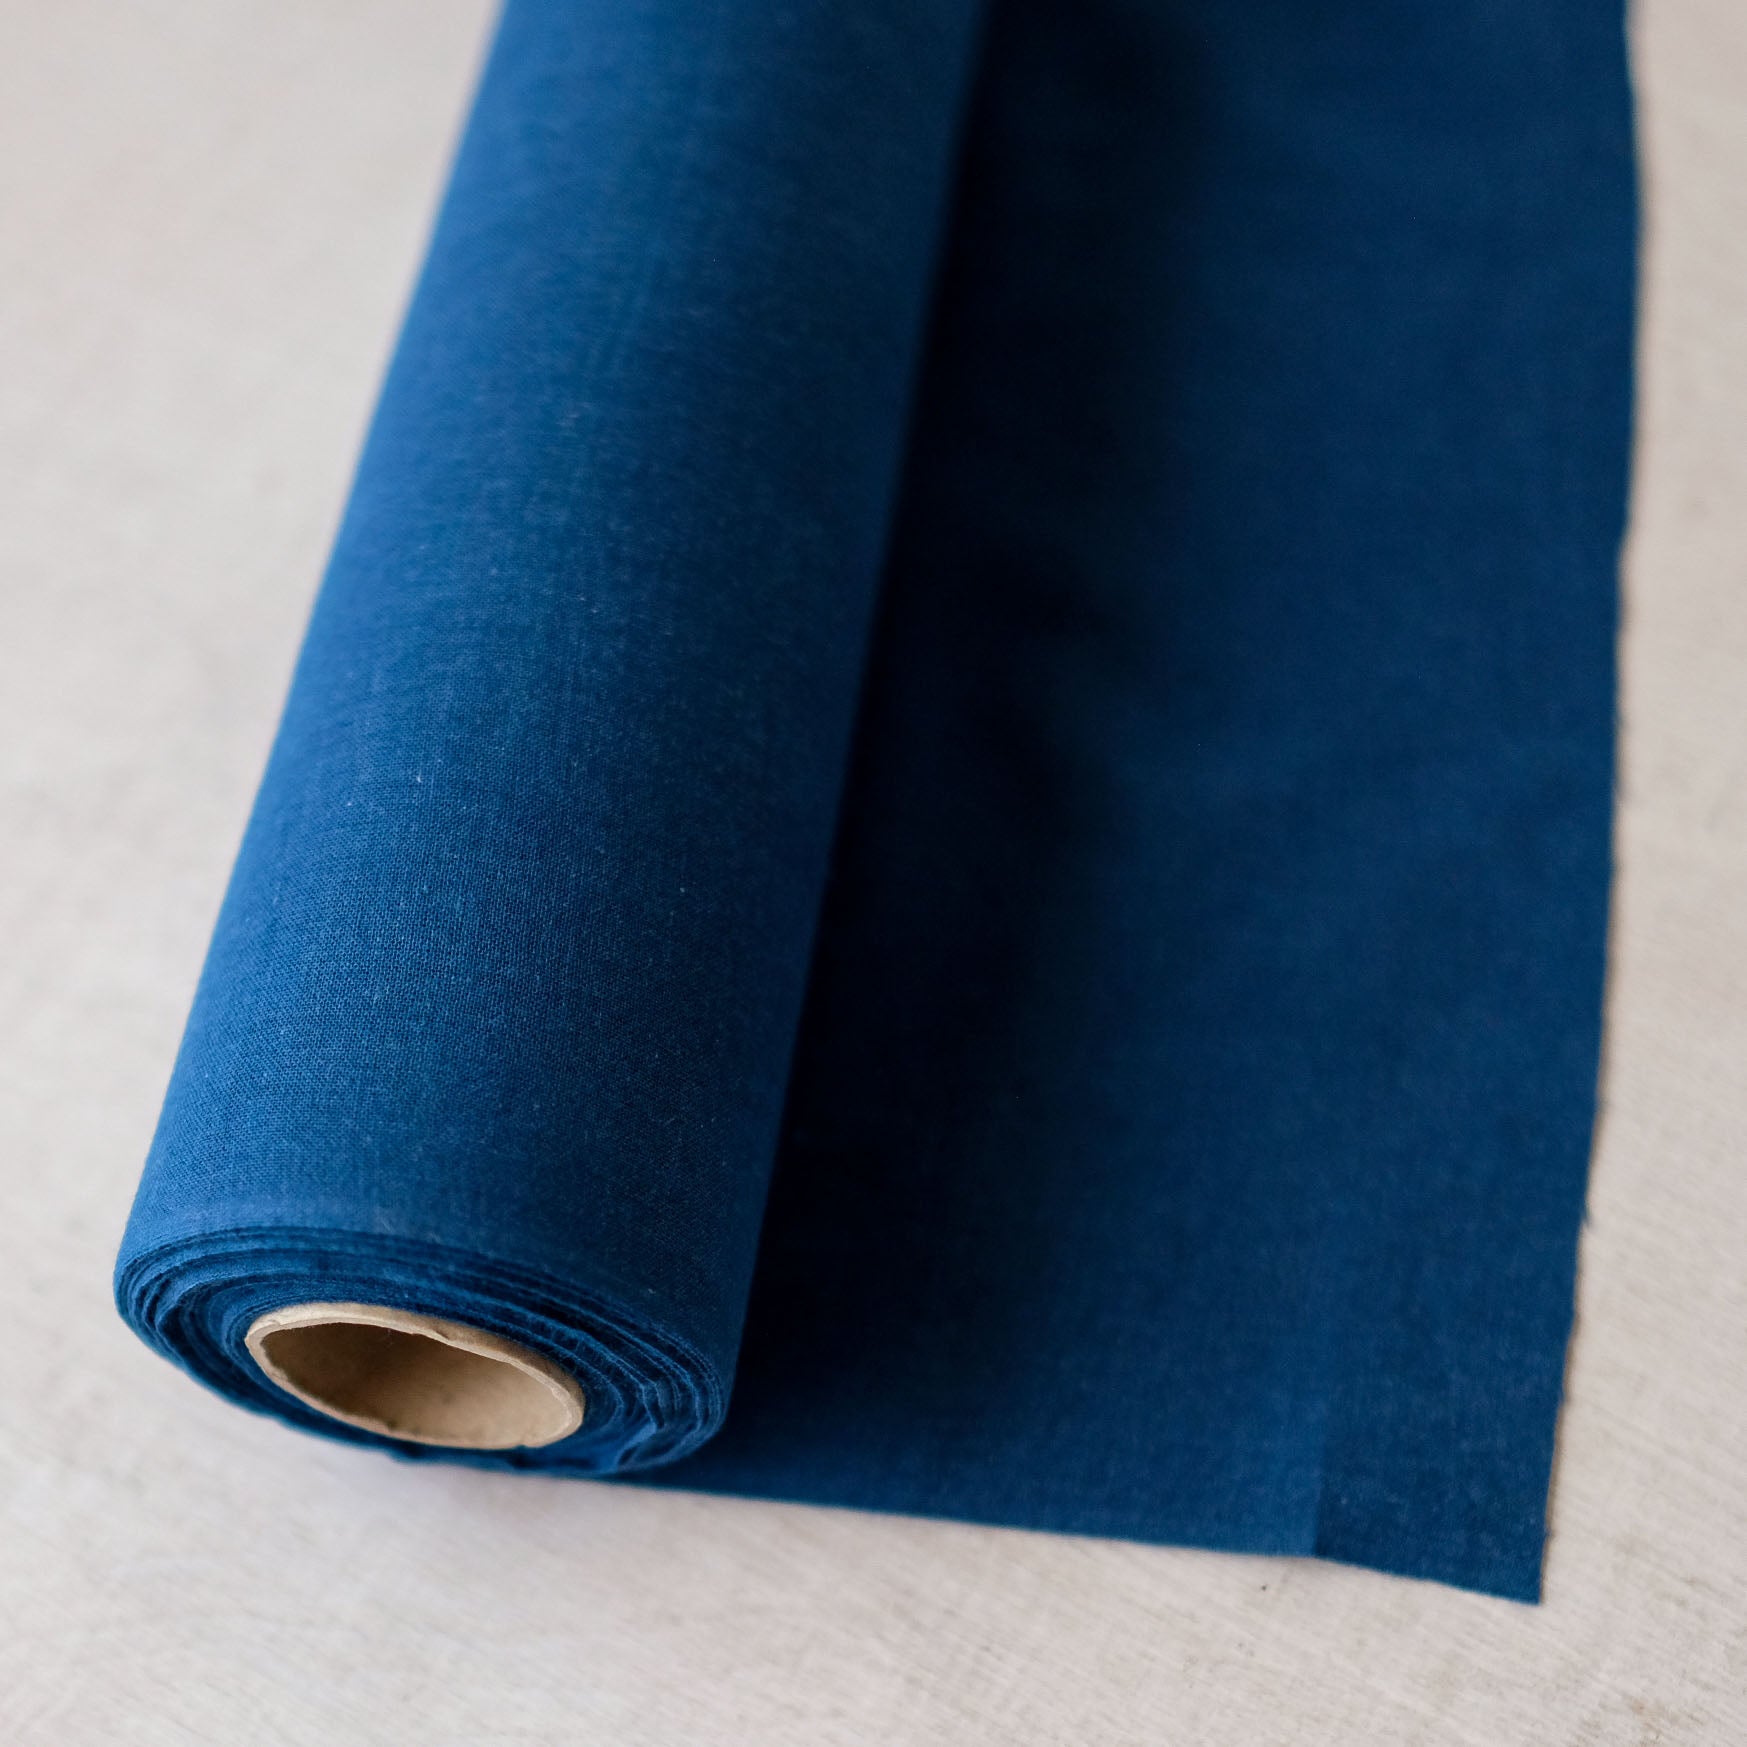 Indigo-dyed fabric - 100% cotton - 13 3/4" wide